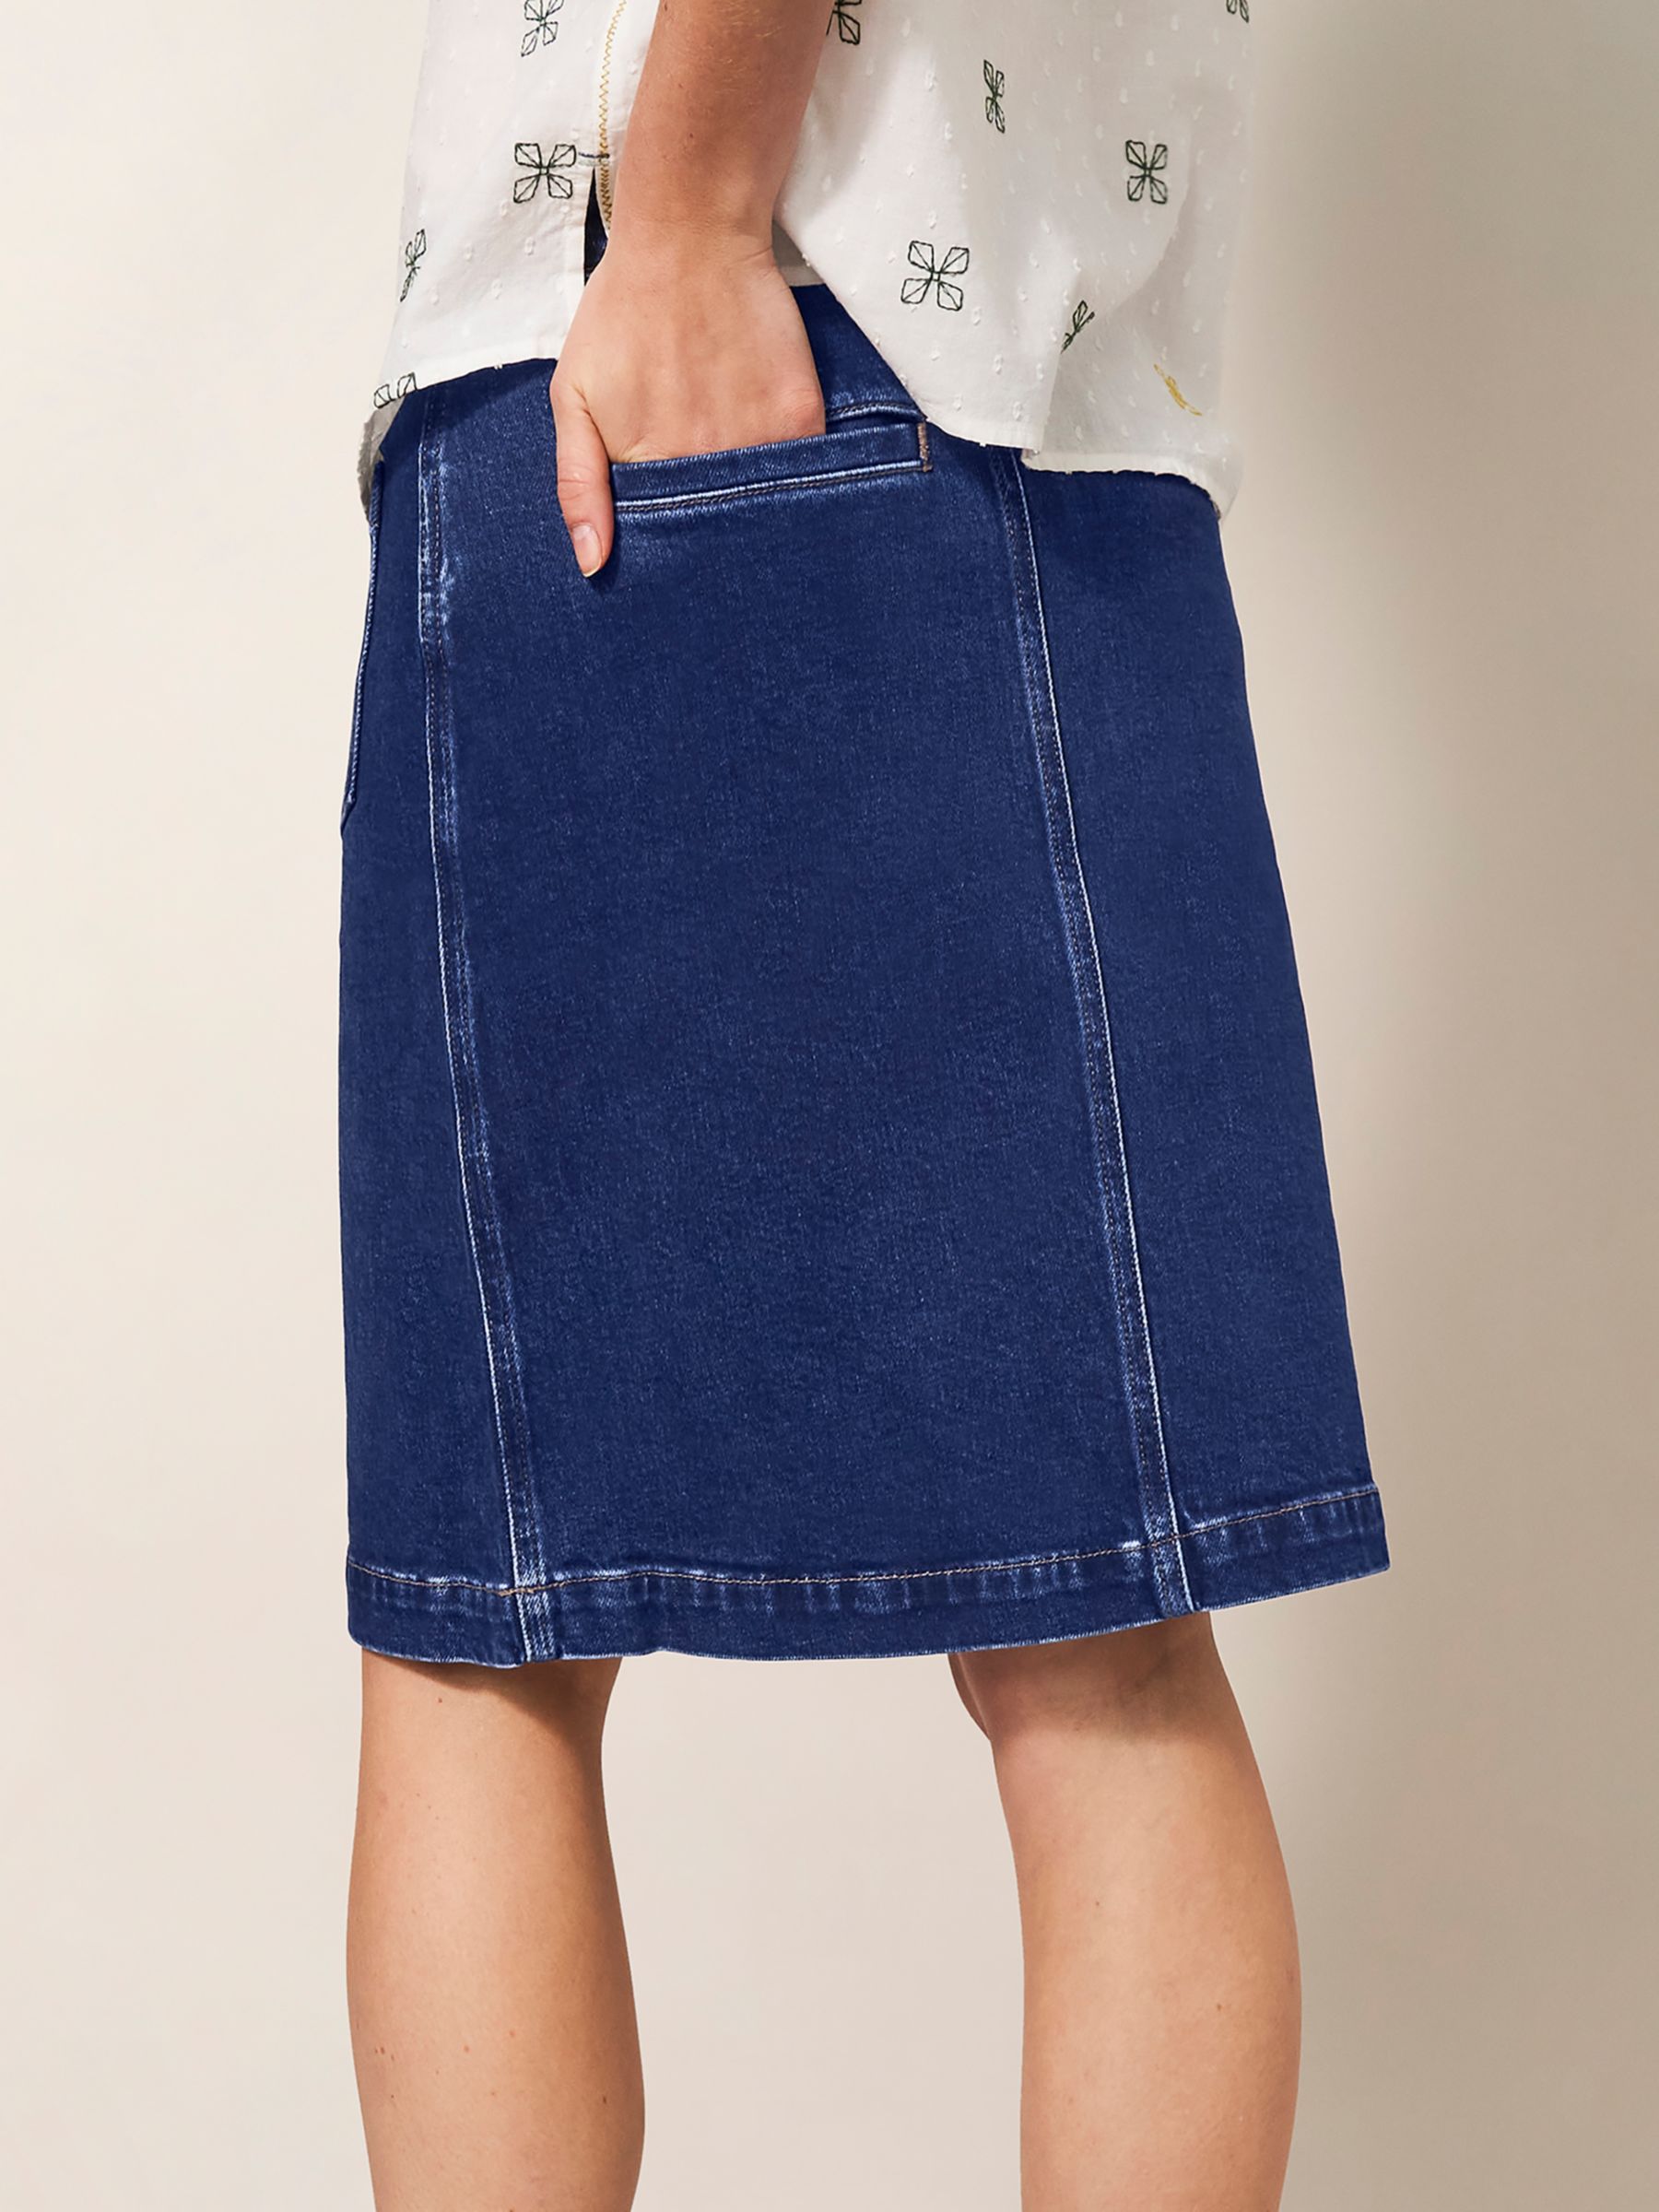 White Stuff Melody Denim Skirt, Indigo Blue at John Lewis & Partners